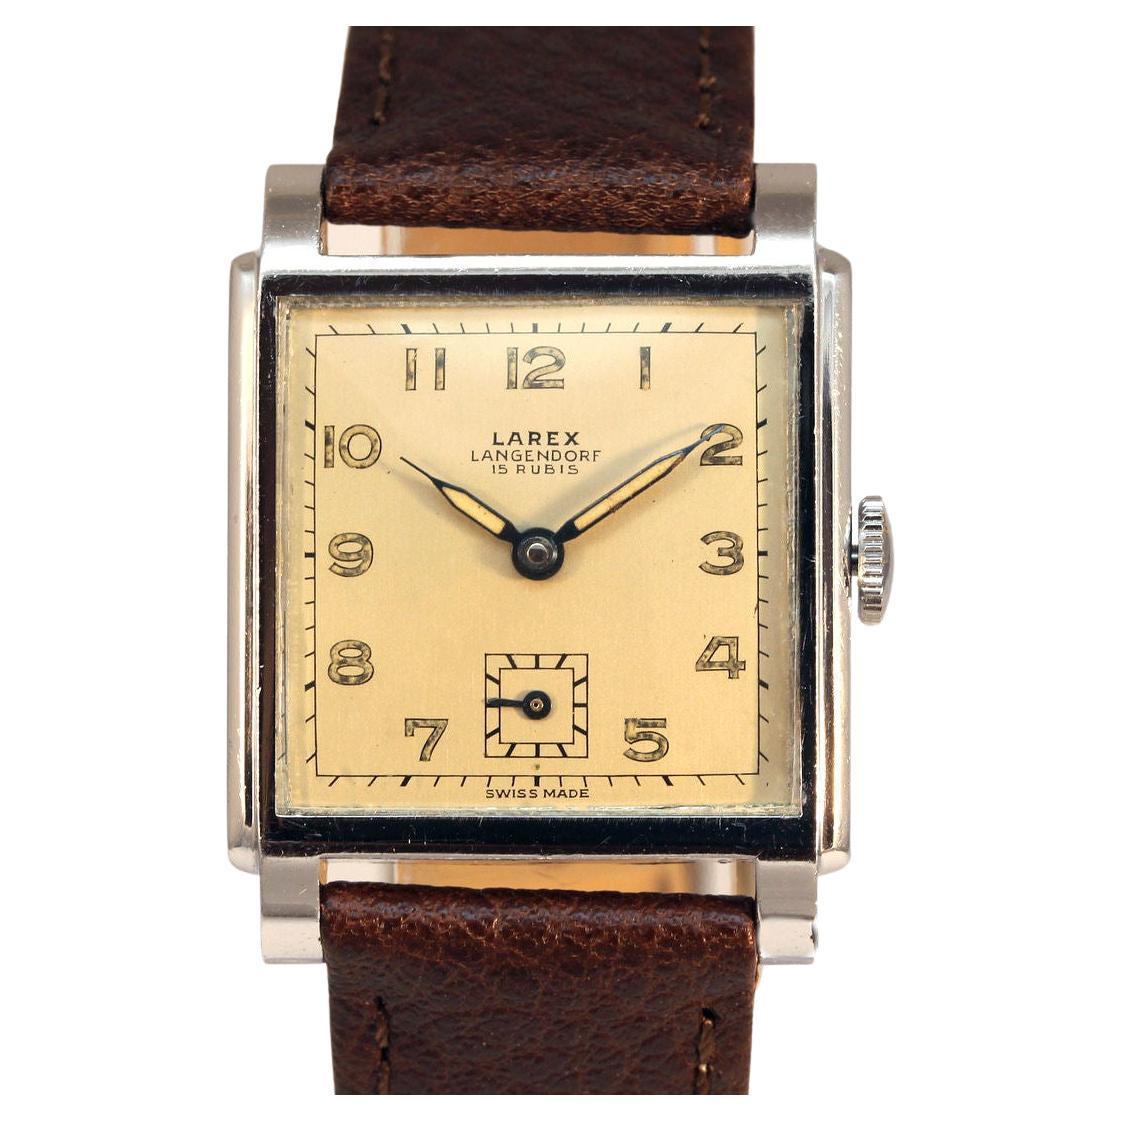 Art Deco Gents Swiss Manual Wrist Watch By Larex, c1939 For Sale